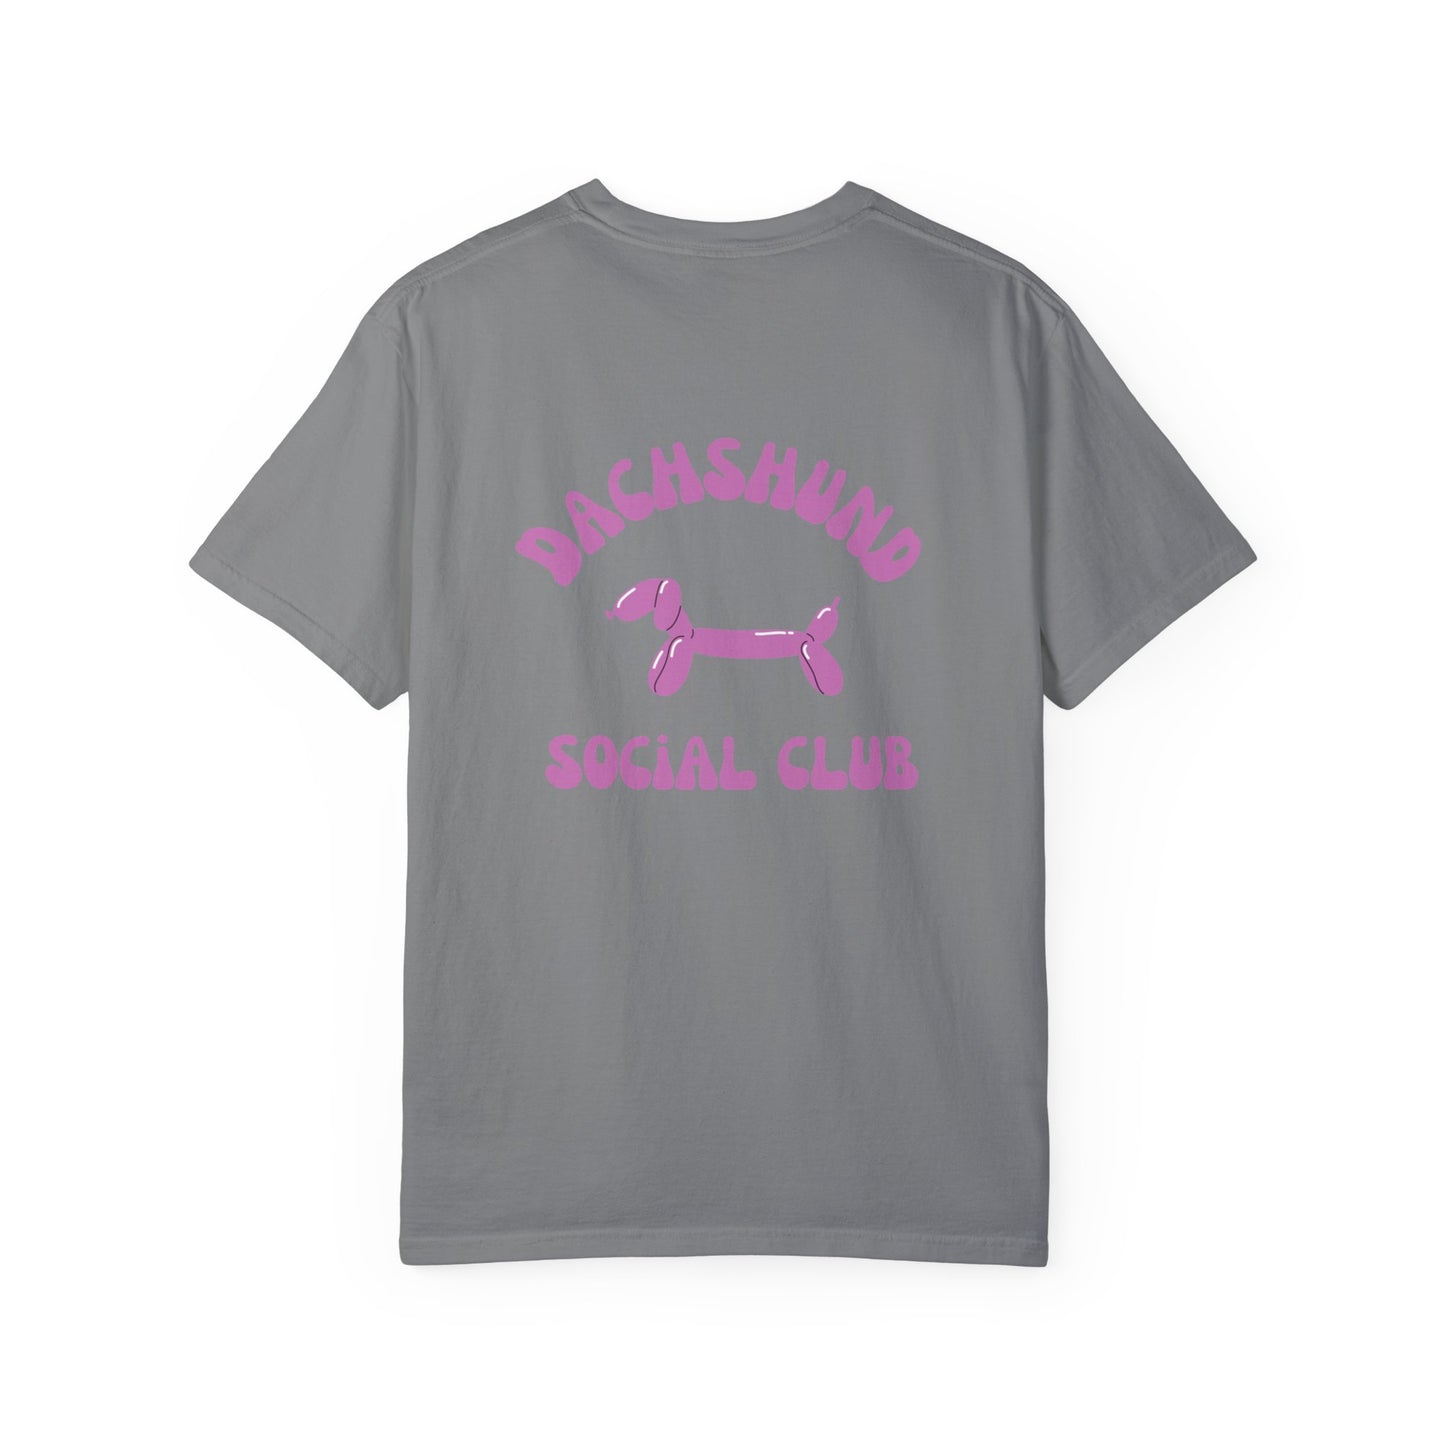 Dachshund Social Club Unisex Garment-Dyed T-shirt